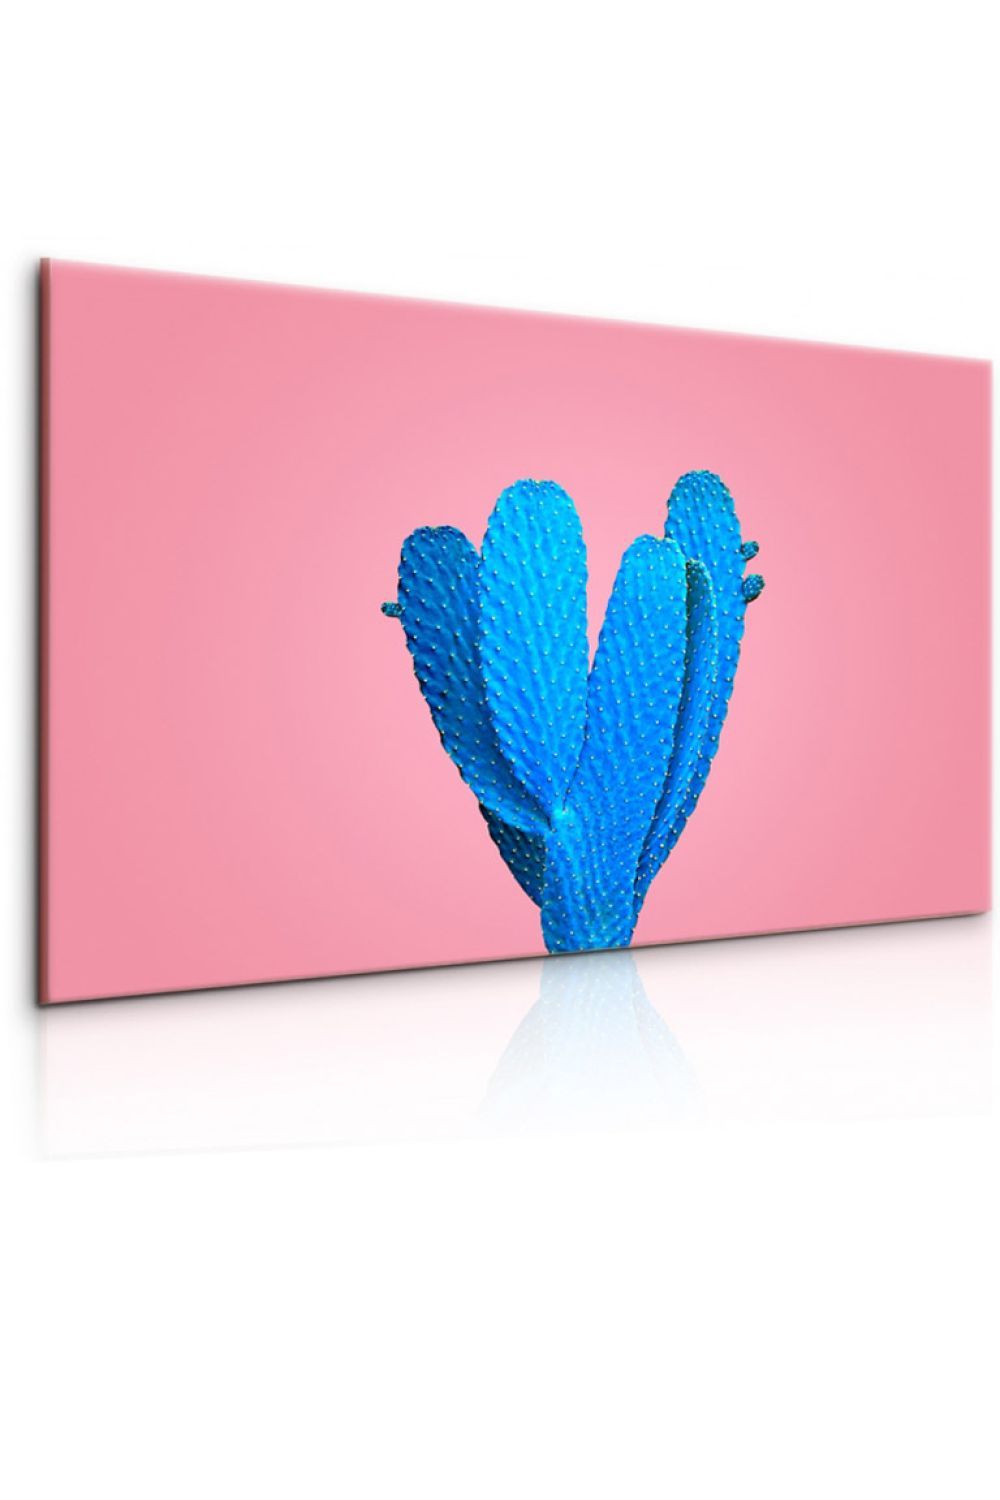 Obraz modrý kaktus Velikost (šířka x výška): 150x100 cm - S-obrazy.cz